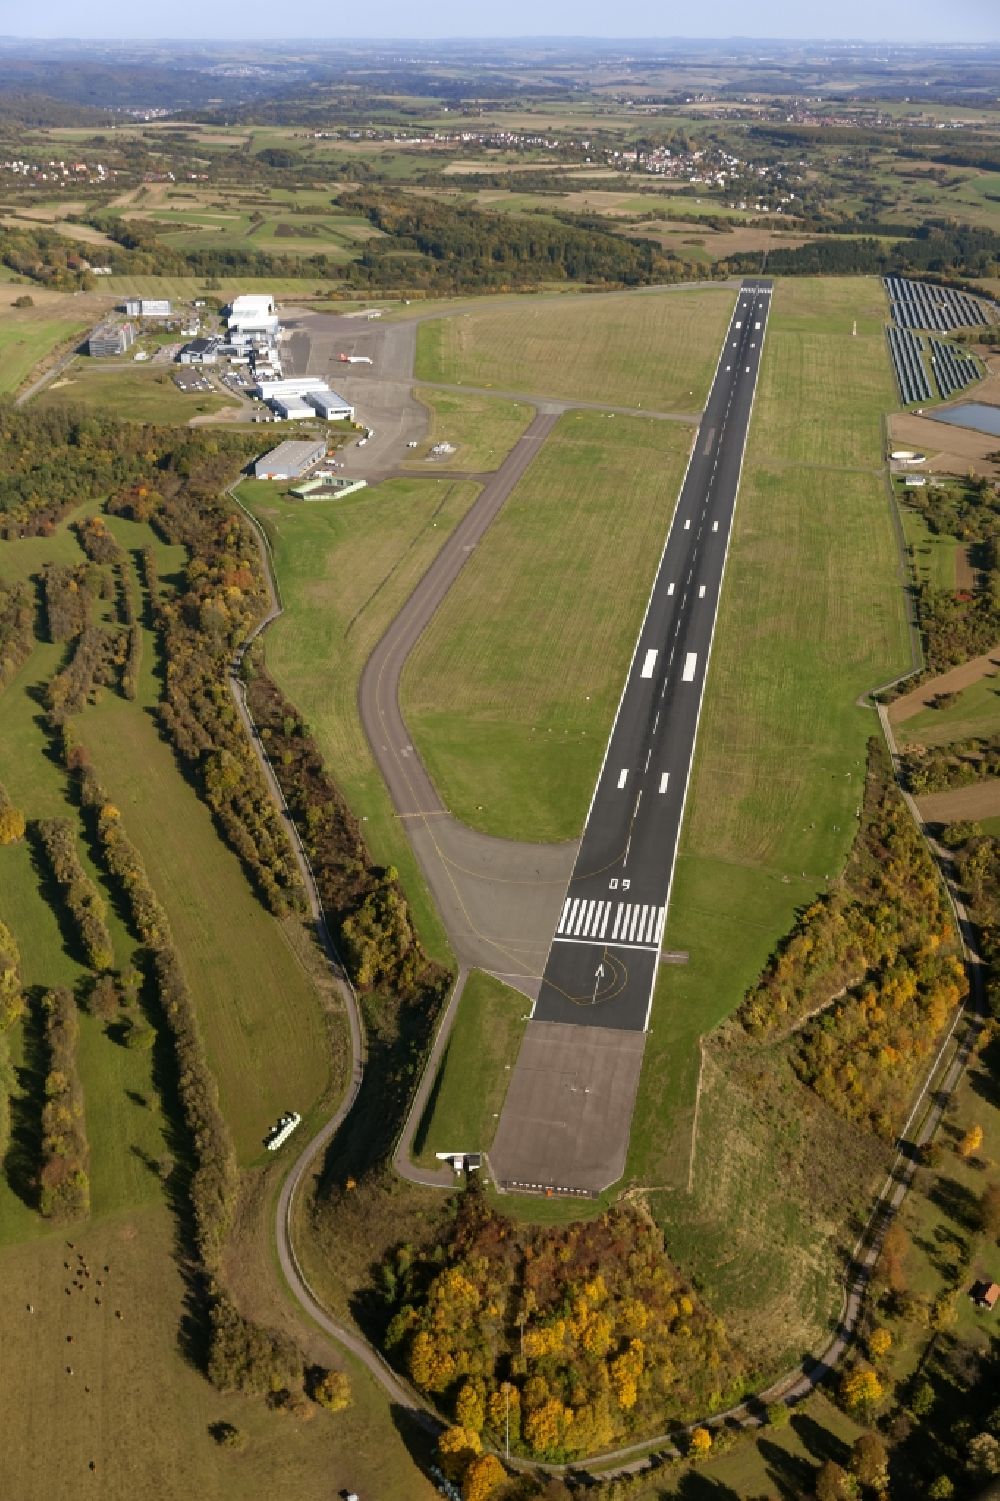 Aerial image Saarbrücken - Runway with taxiways to the terminal on the site of the Saarland, Saarbrücken Airport